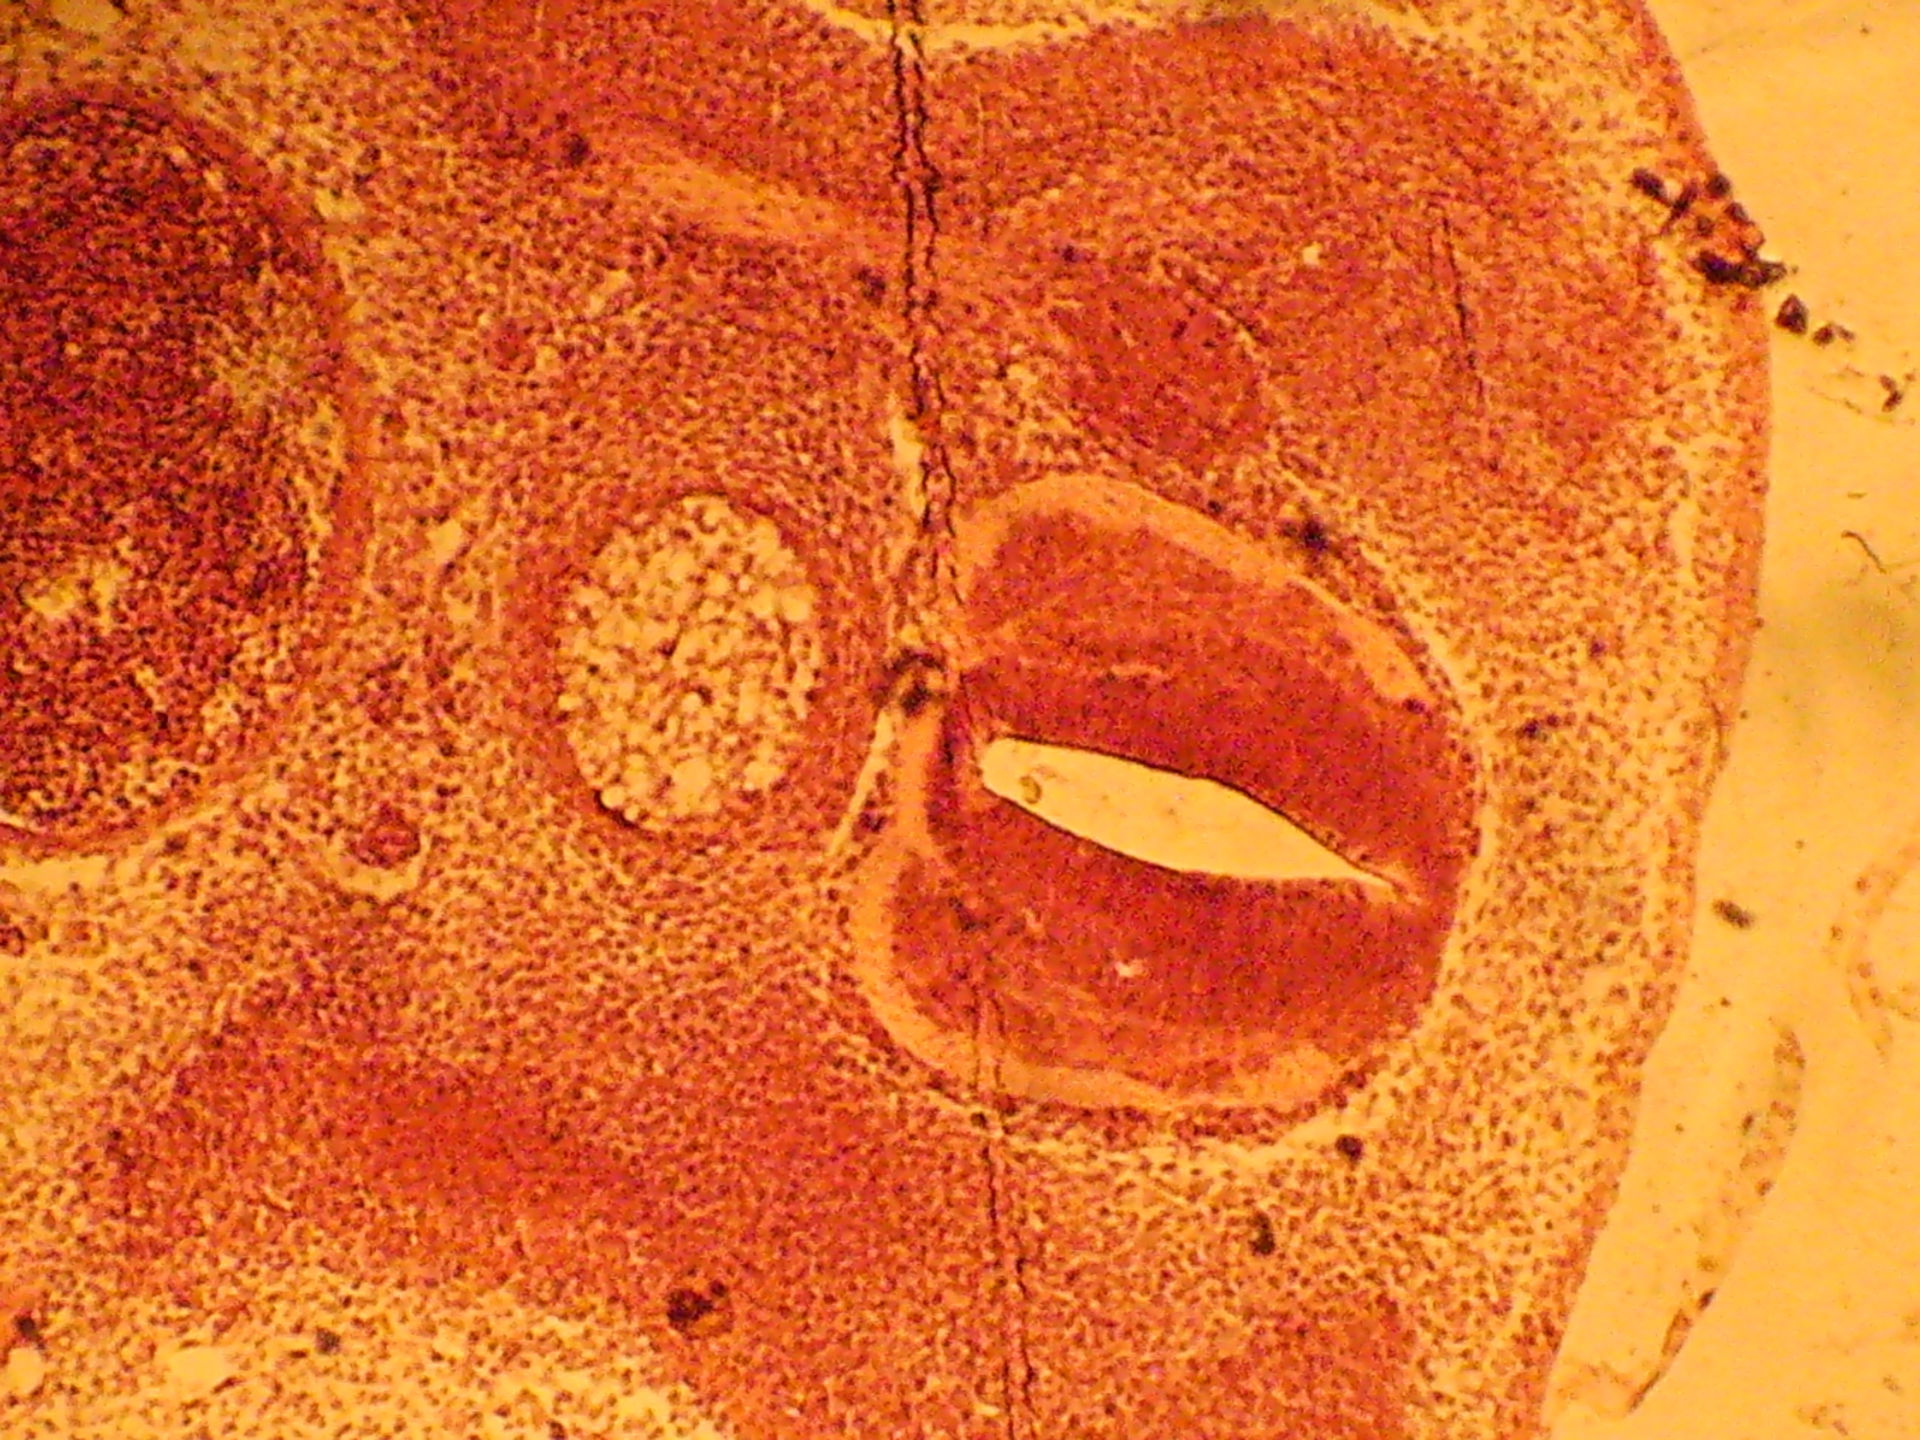 Hühnchenembryo